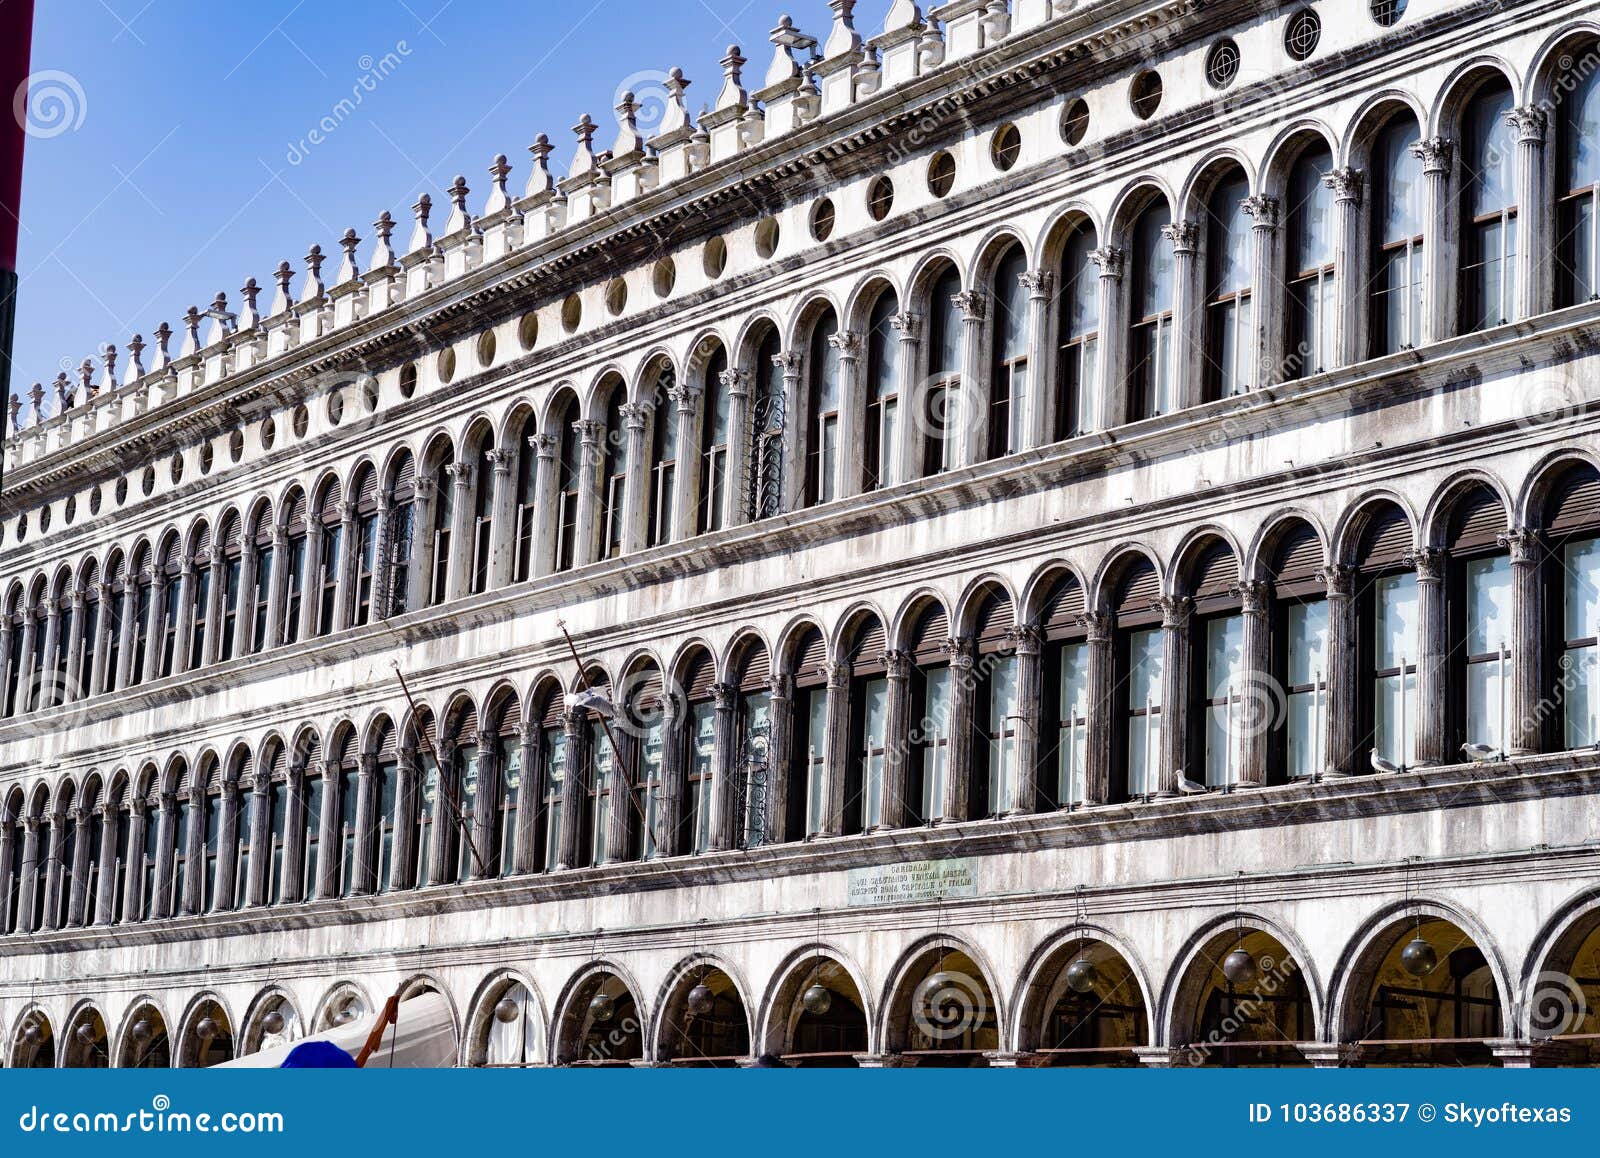 impressive biblioteca nazionale marciana on piazza san marco in venice.